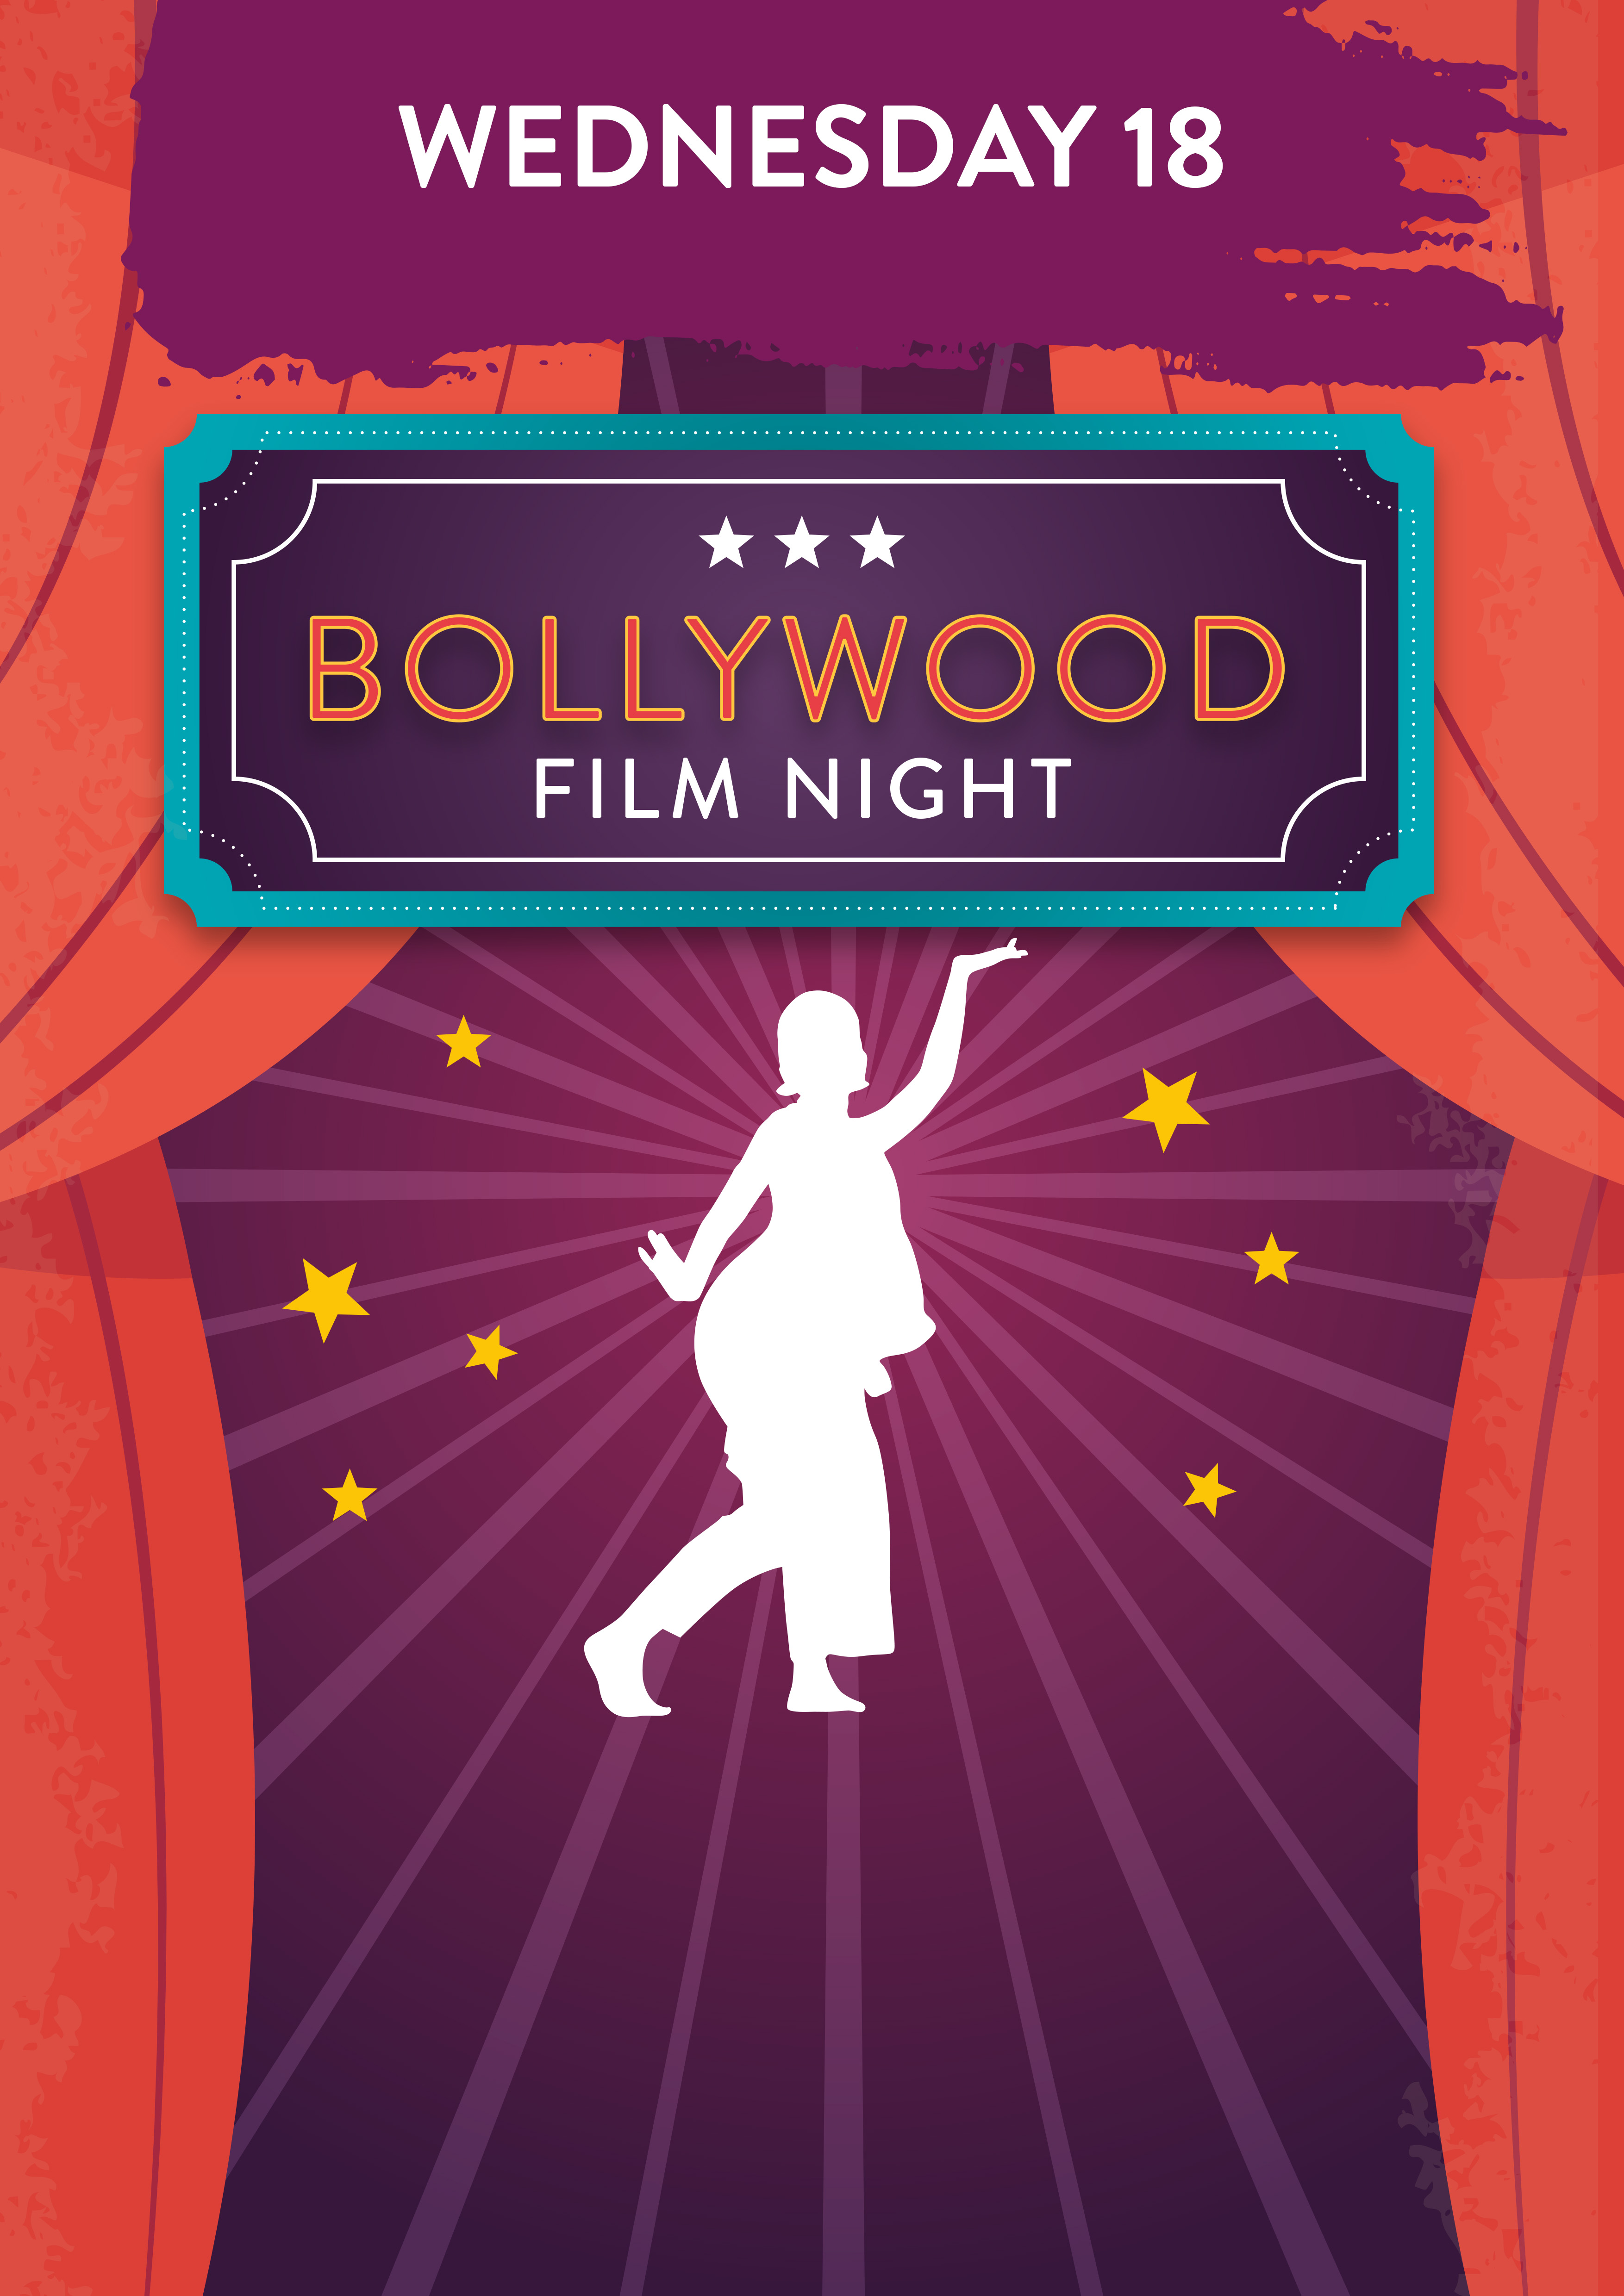 Wednesday 18 January. Bollywood Film Night.